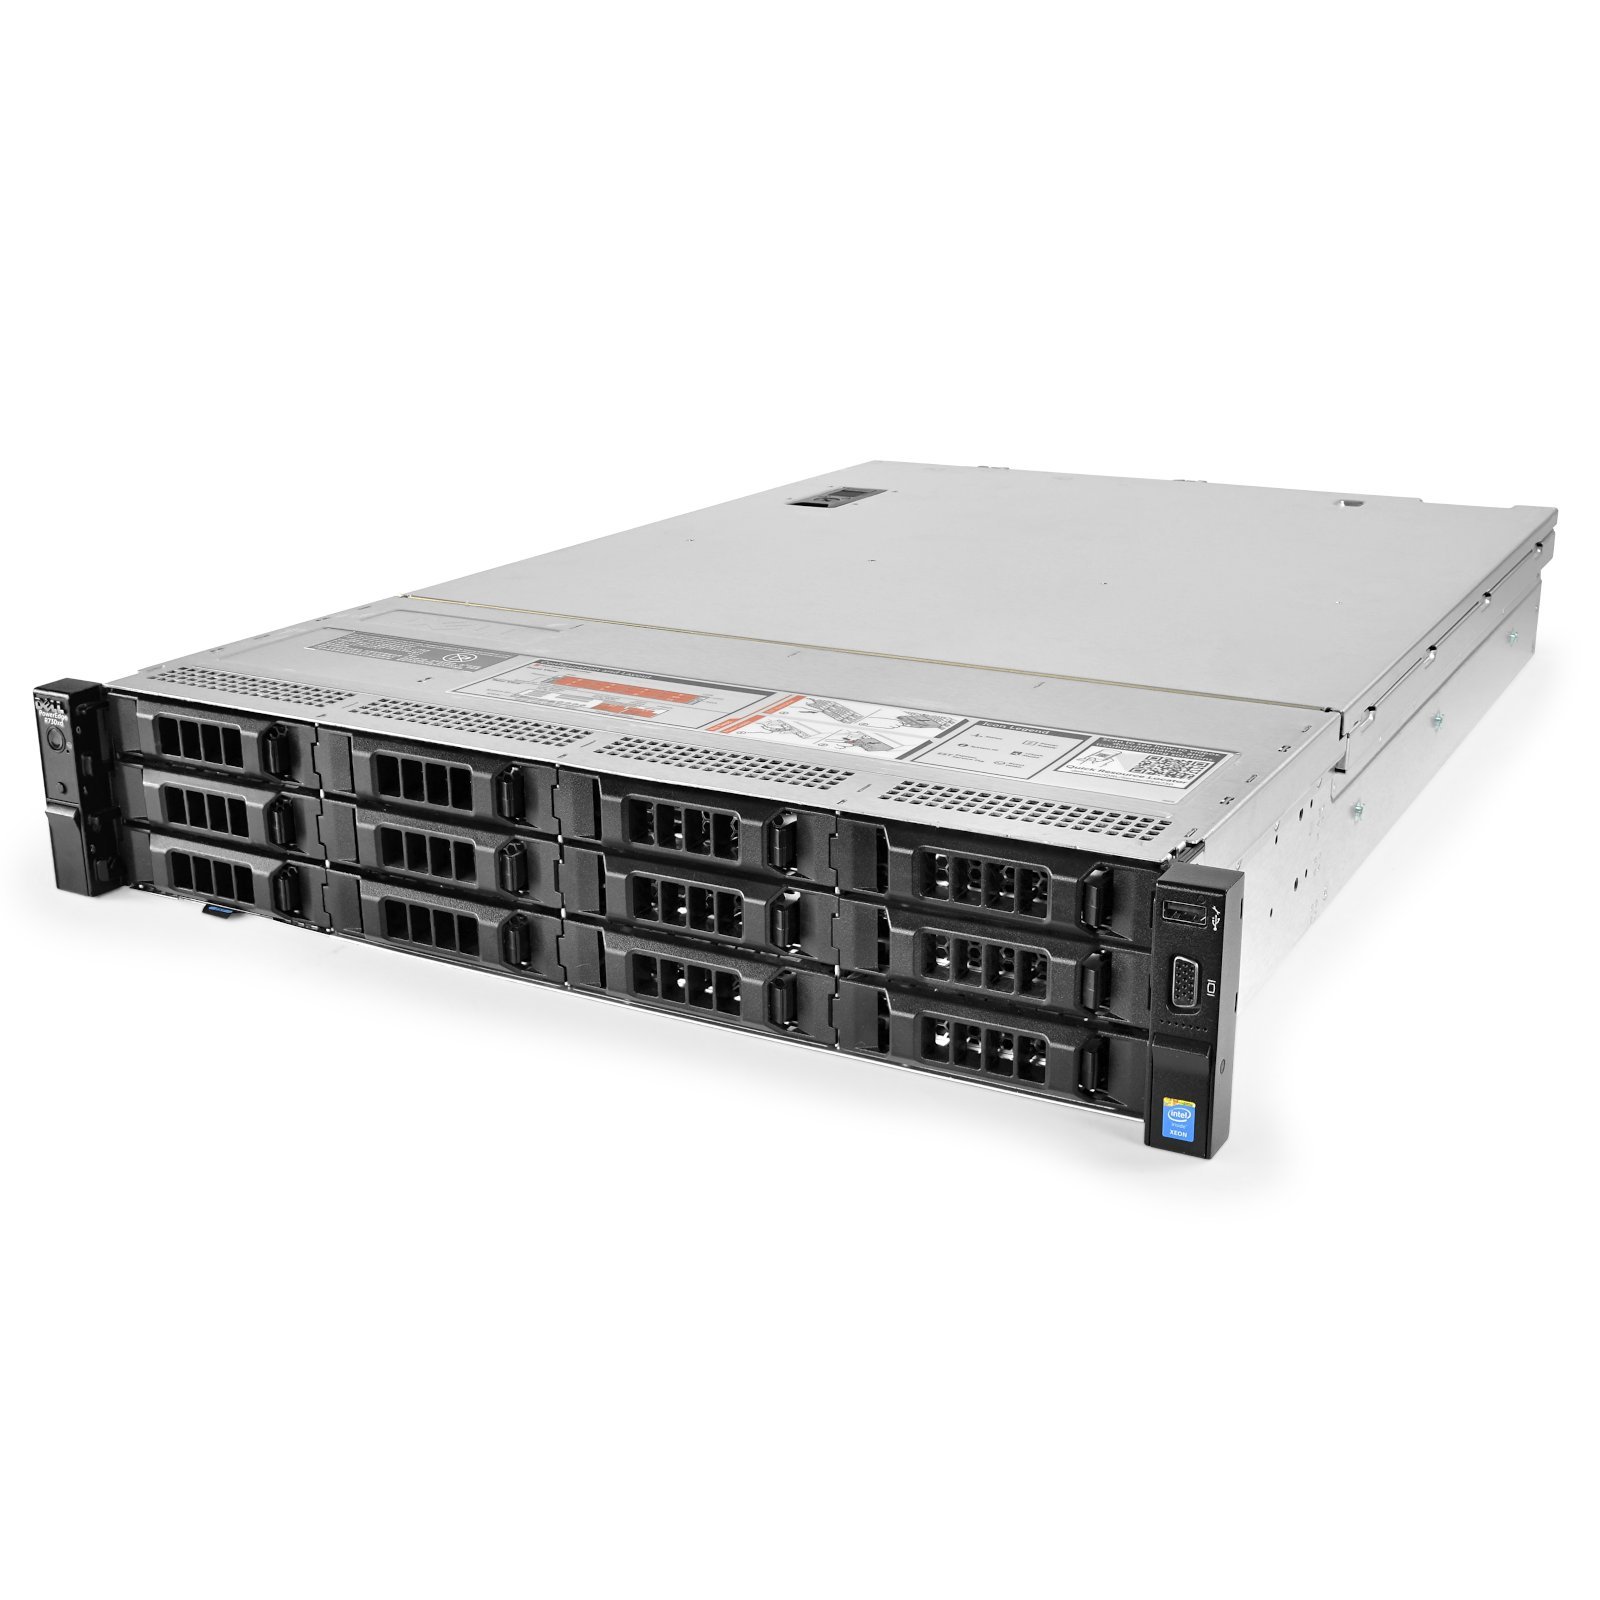 Подробное фото Сервер DELL PowerEdge R730XD 2x Xeon E5-2660v3 128Gb 2133P DDR4 12x noHDD 3.5" SAS RAID Perc H730 mini, 1024Mb, 2*PSU 750W